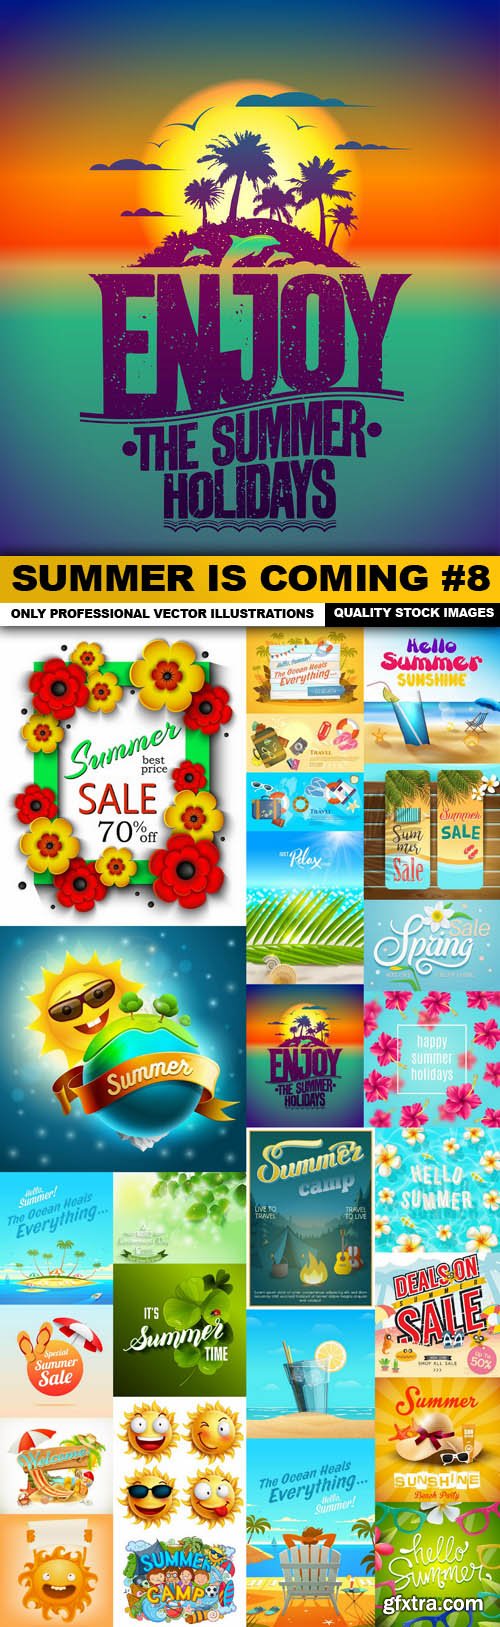 Summer Is Coming #8 - 25 Vector